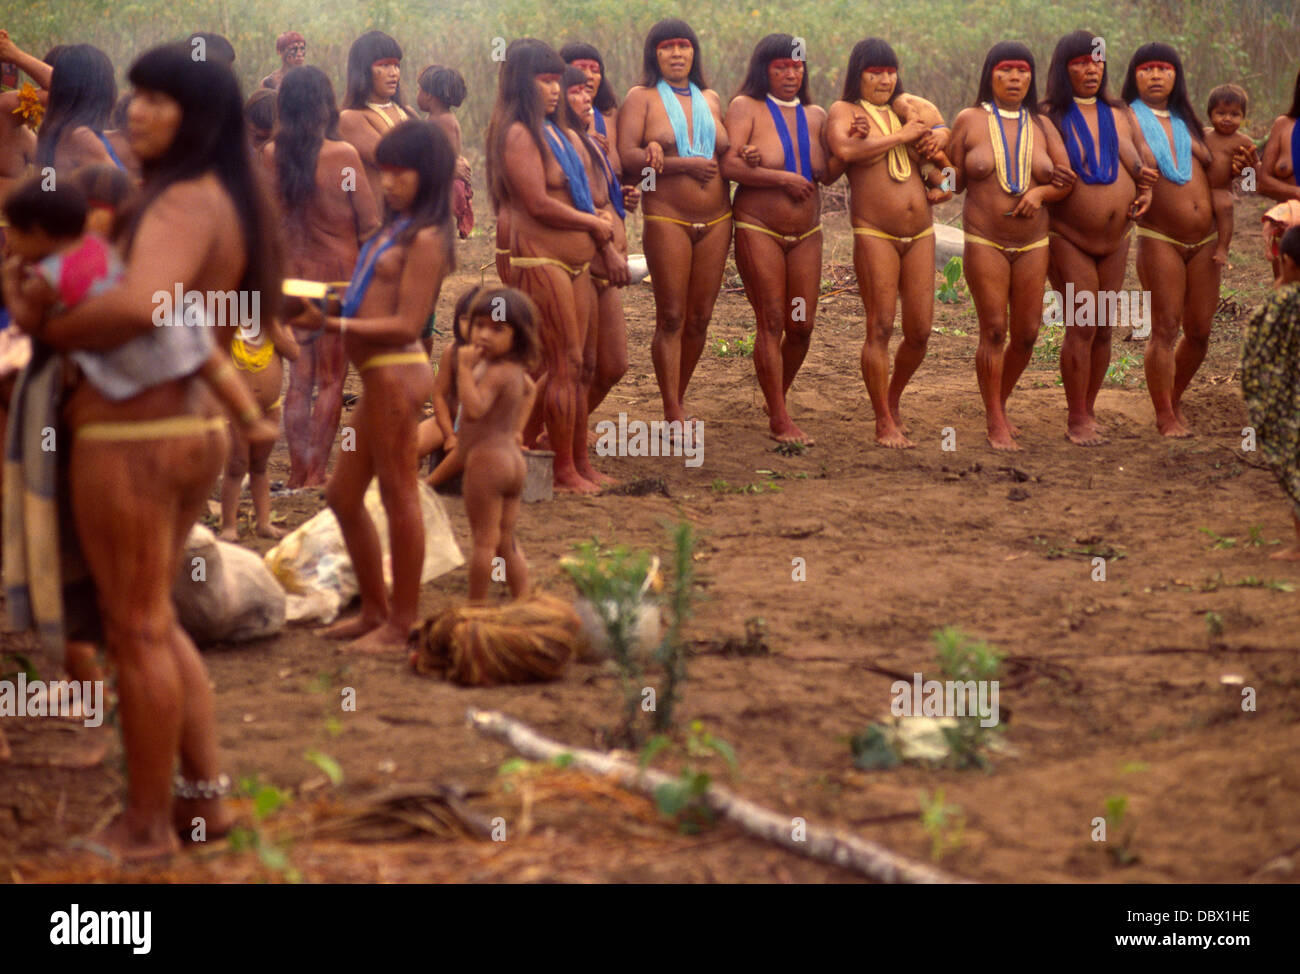 Nude indigenous amazon tribe photos hentai photo